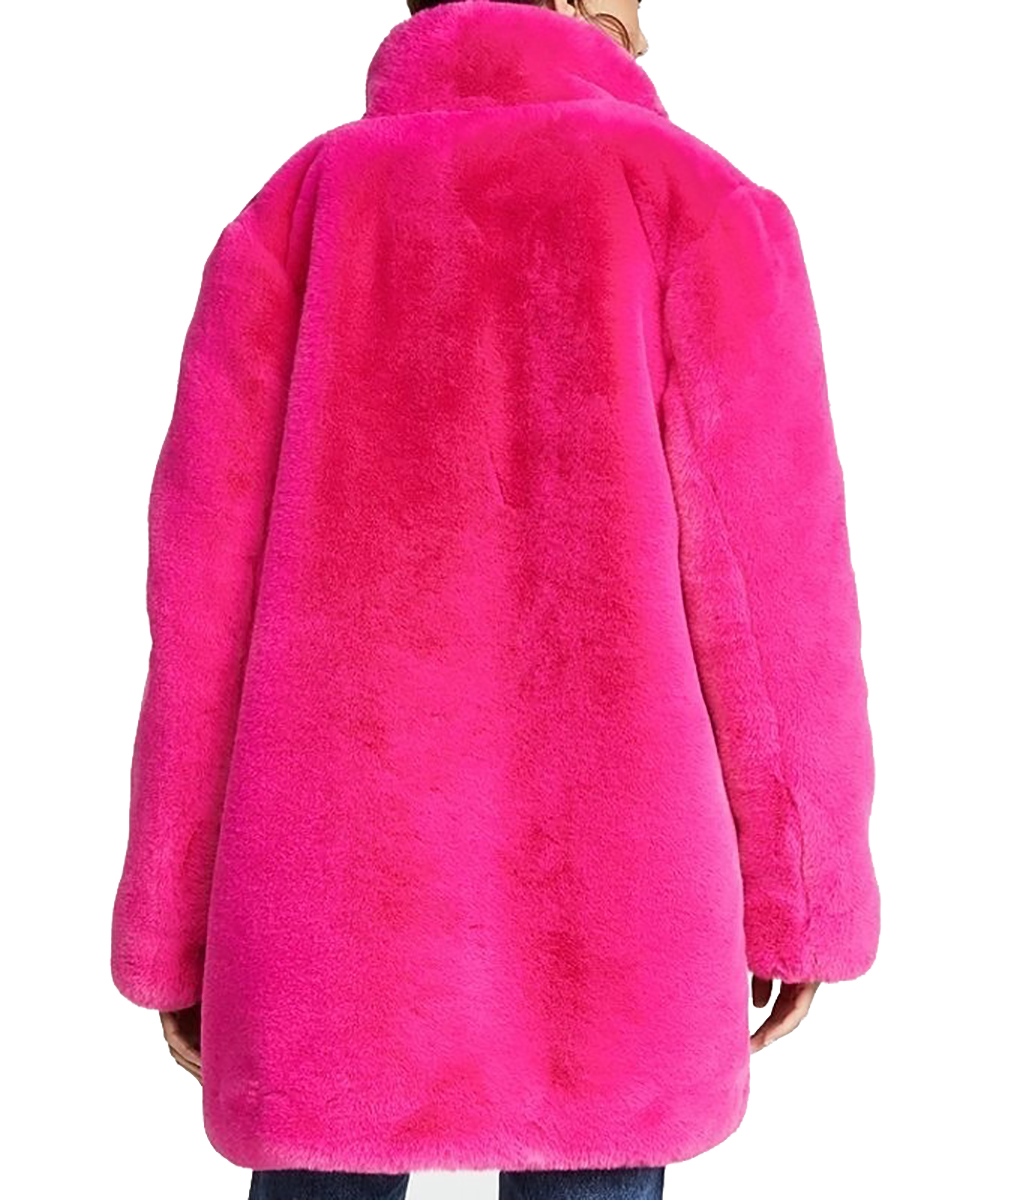 Taylor Swift Pink Fur Coat (1)